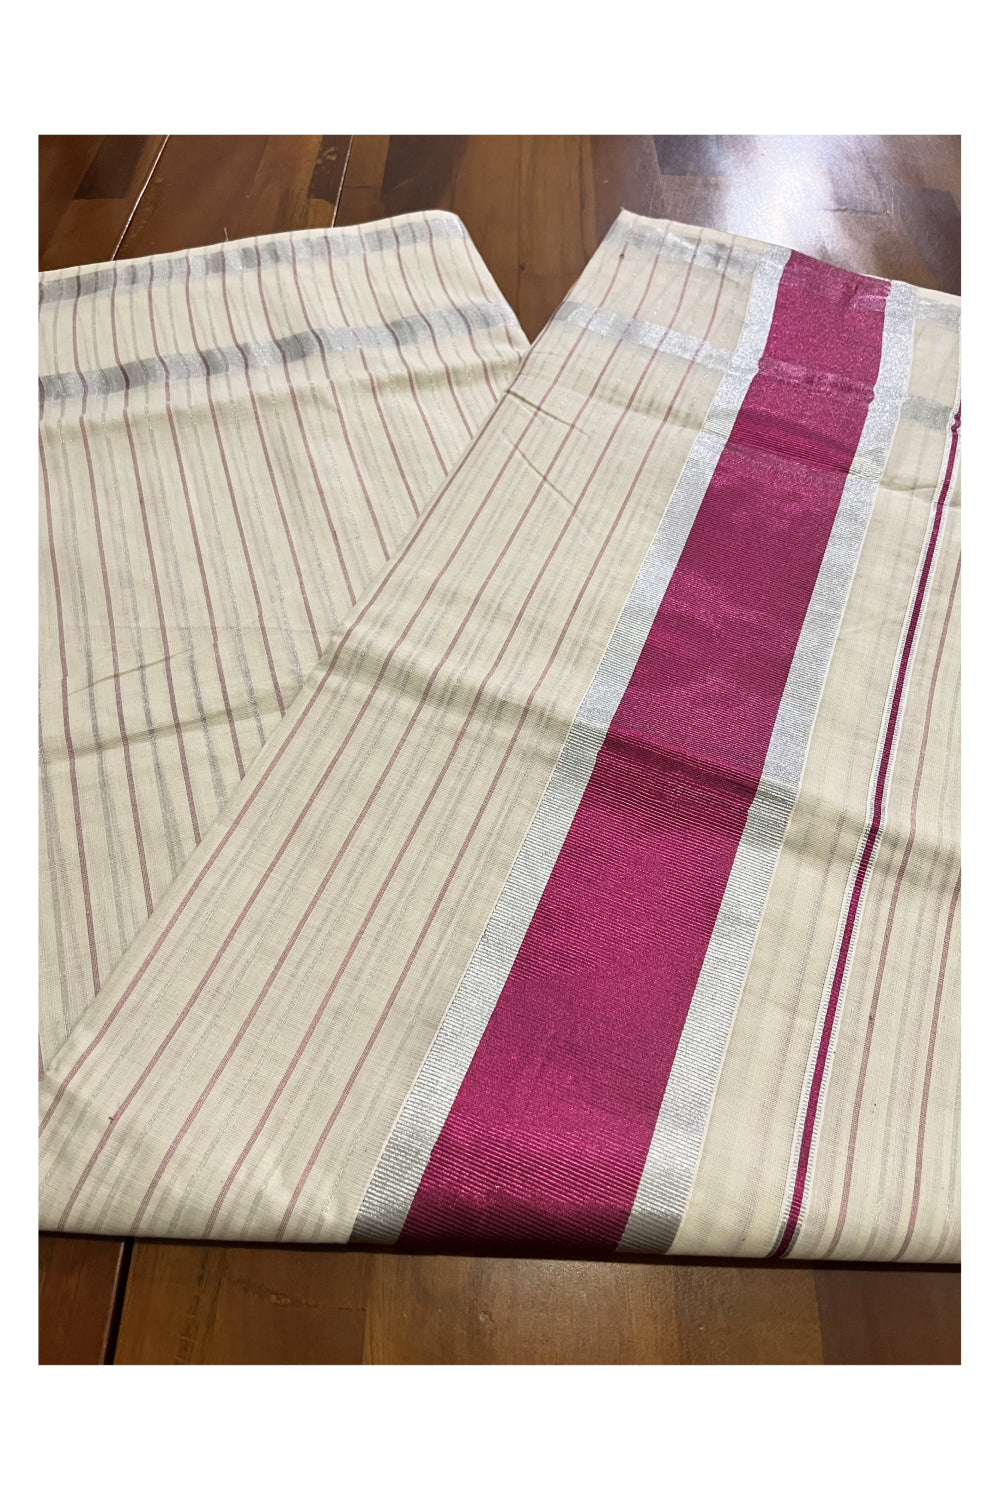 Pure Cotton Kerala Saree with Silver and Magenta Kasavu Lines Across Body